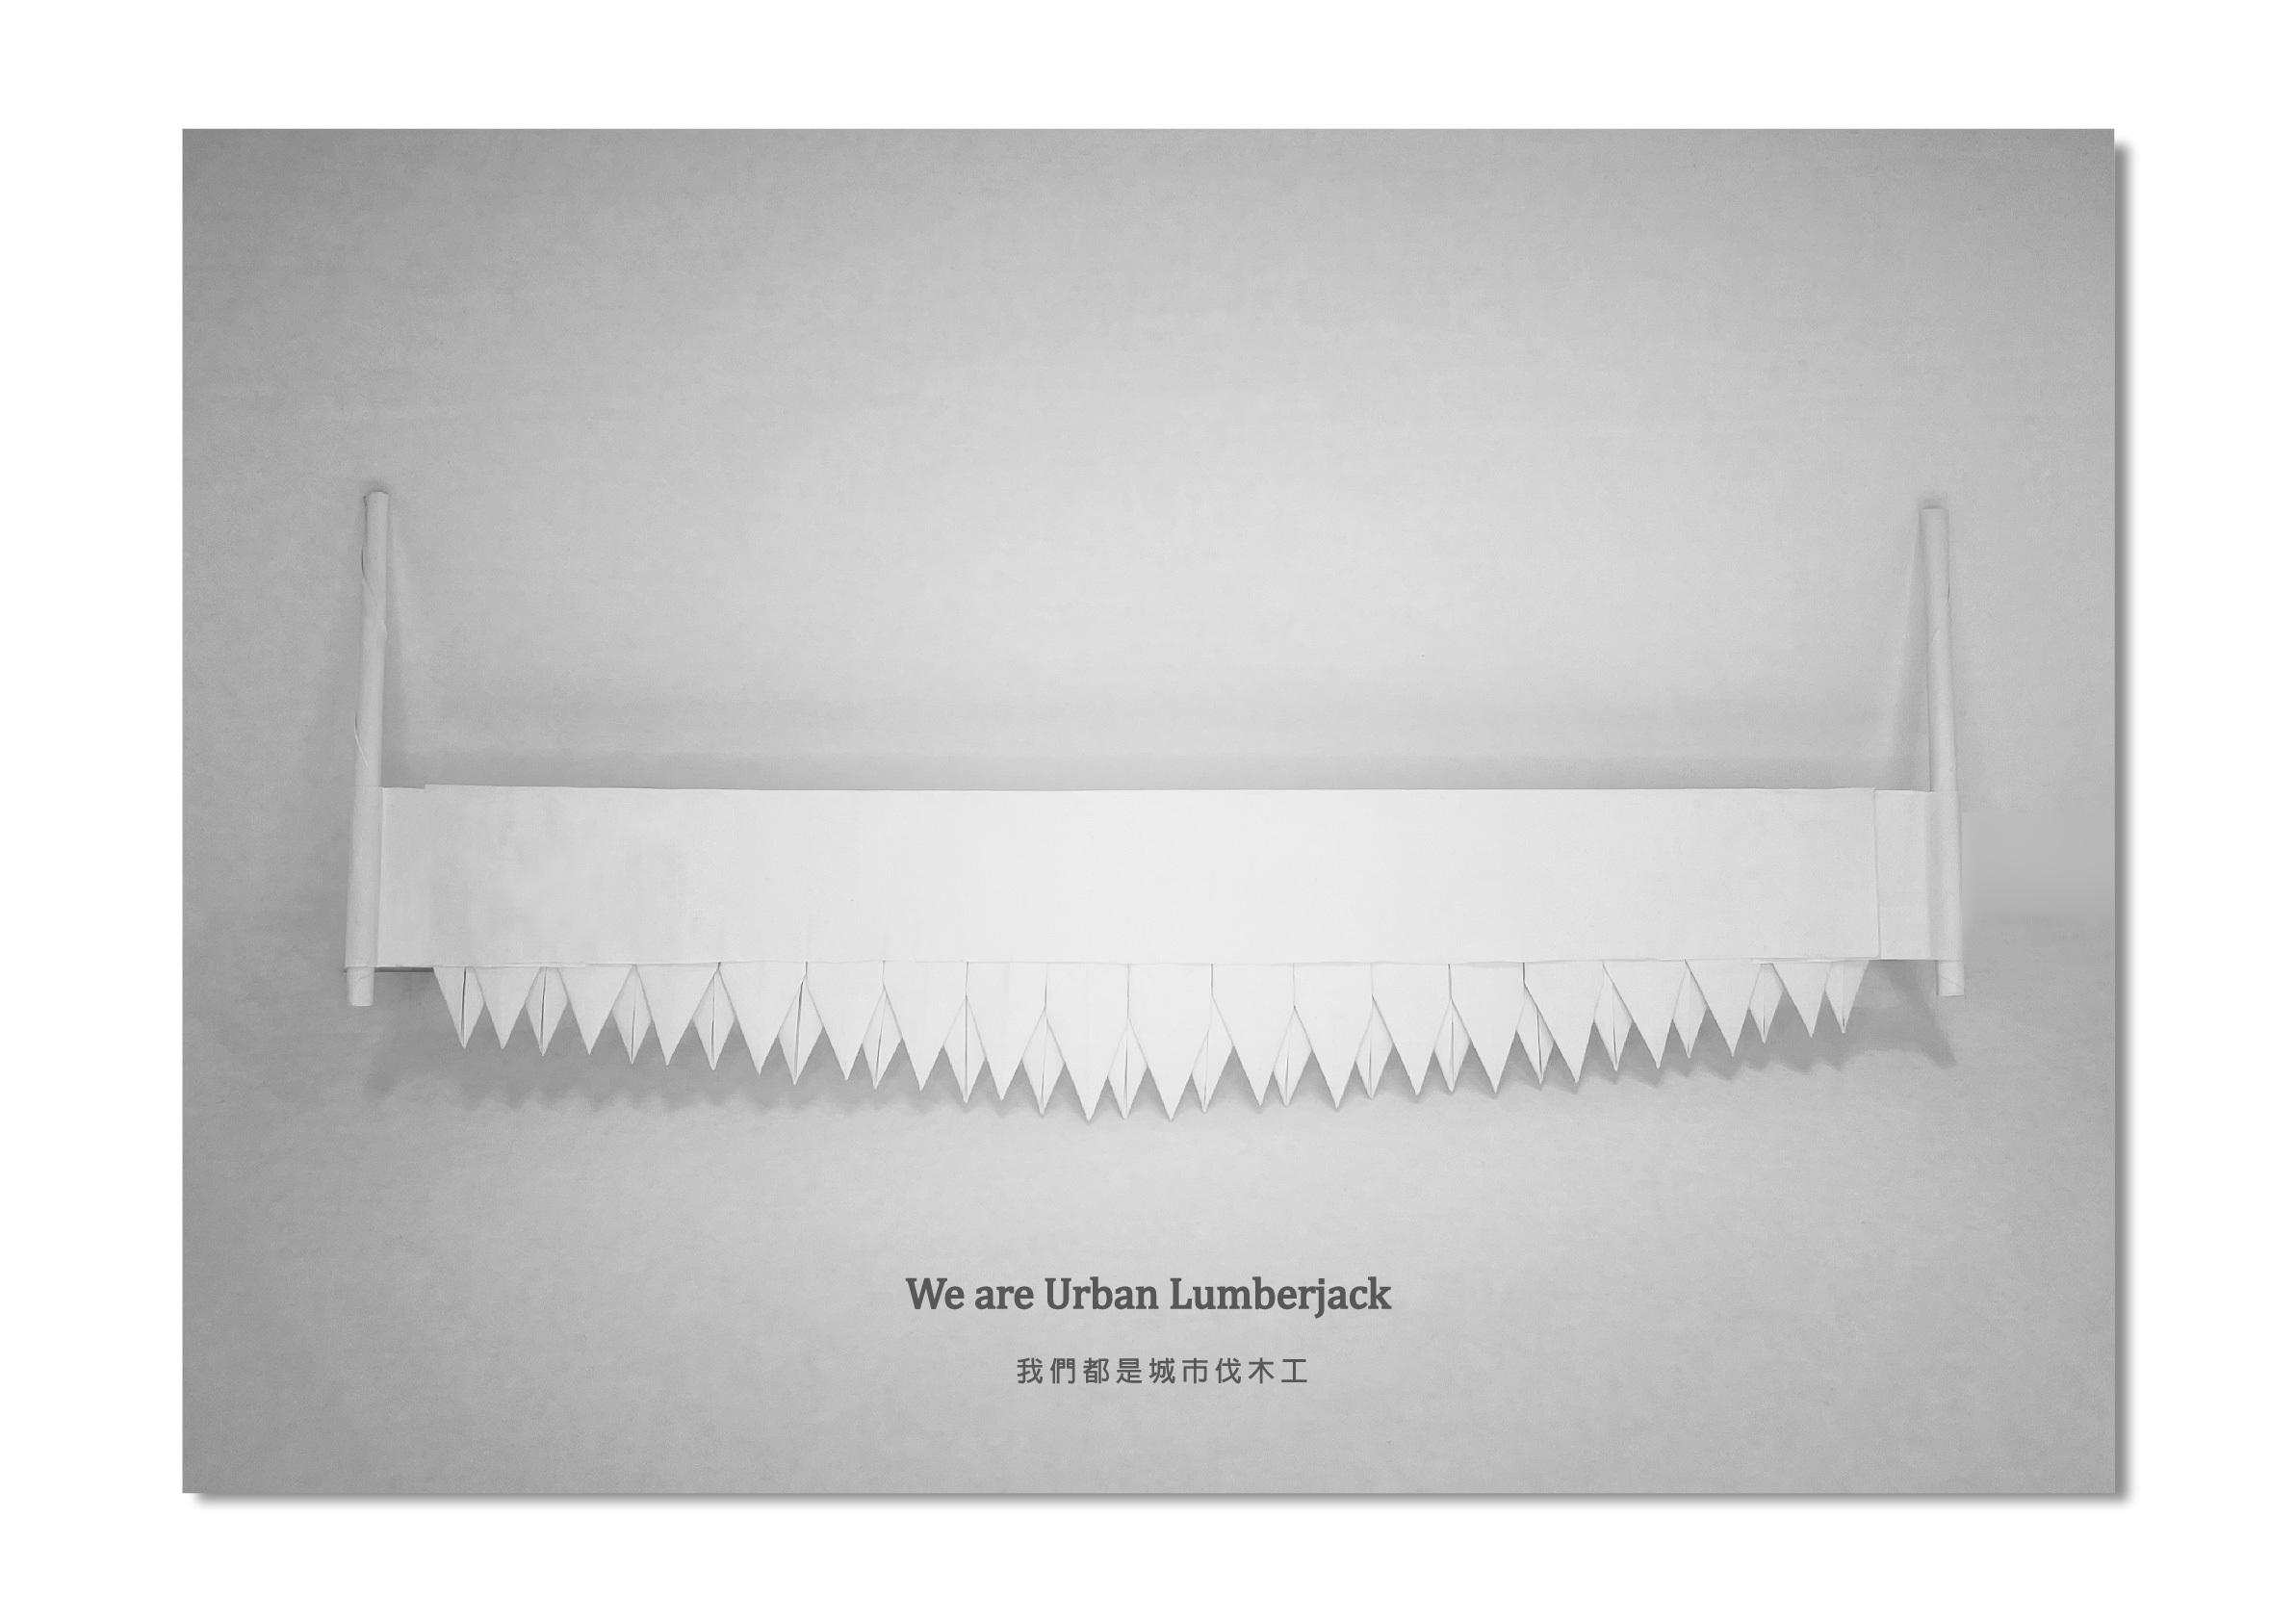 We are Urban Lumberjack